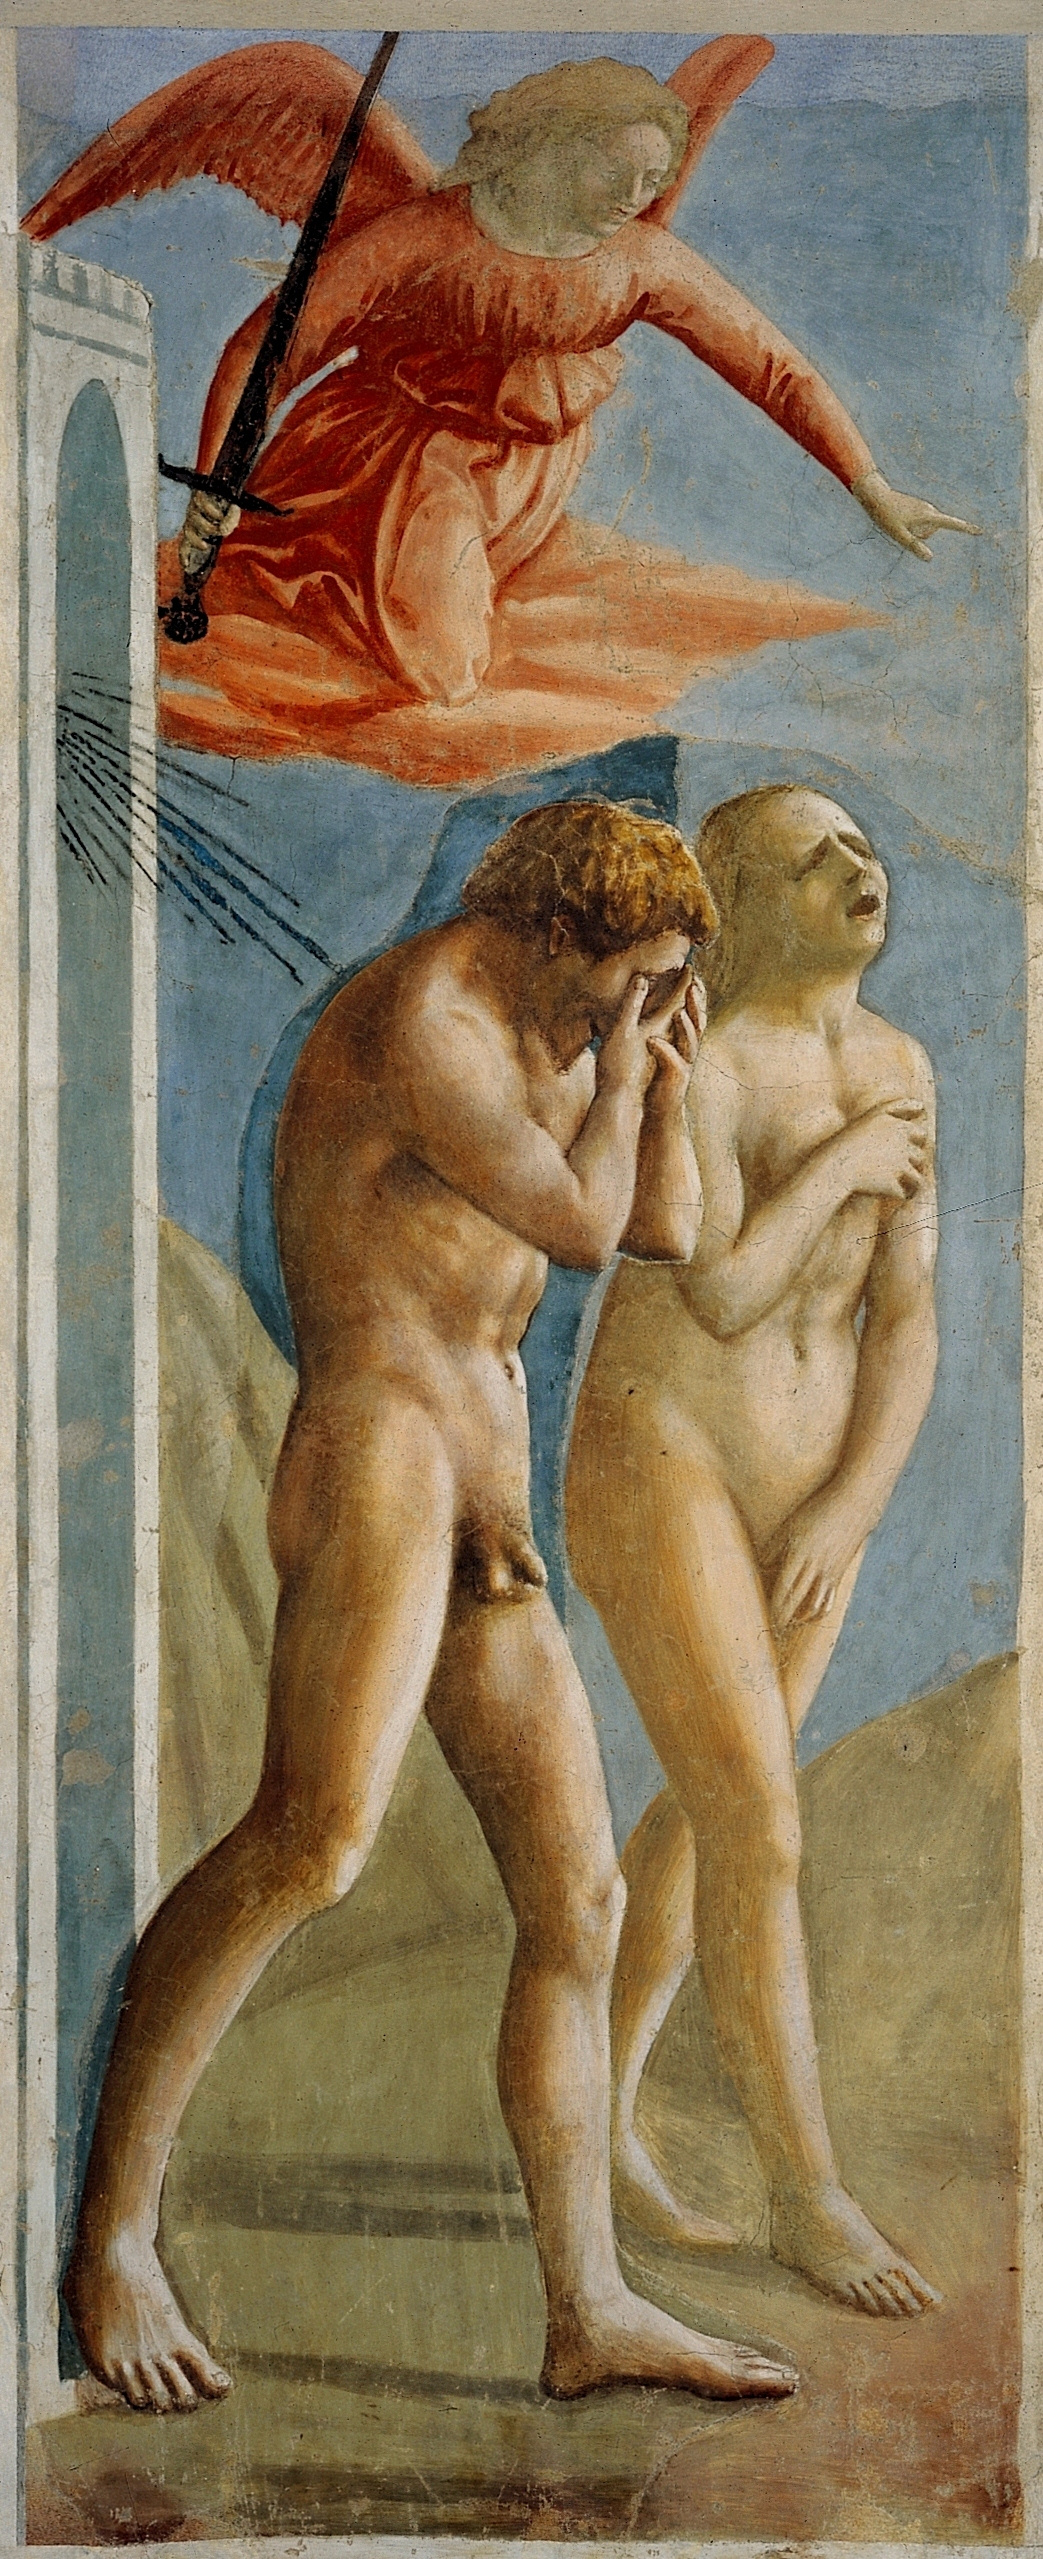 Tommaso Masaccio. Brancacci Chapel. The expulsion of Adam and Eve from the Garden of Eden